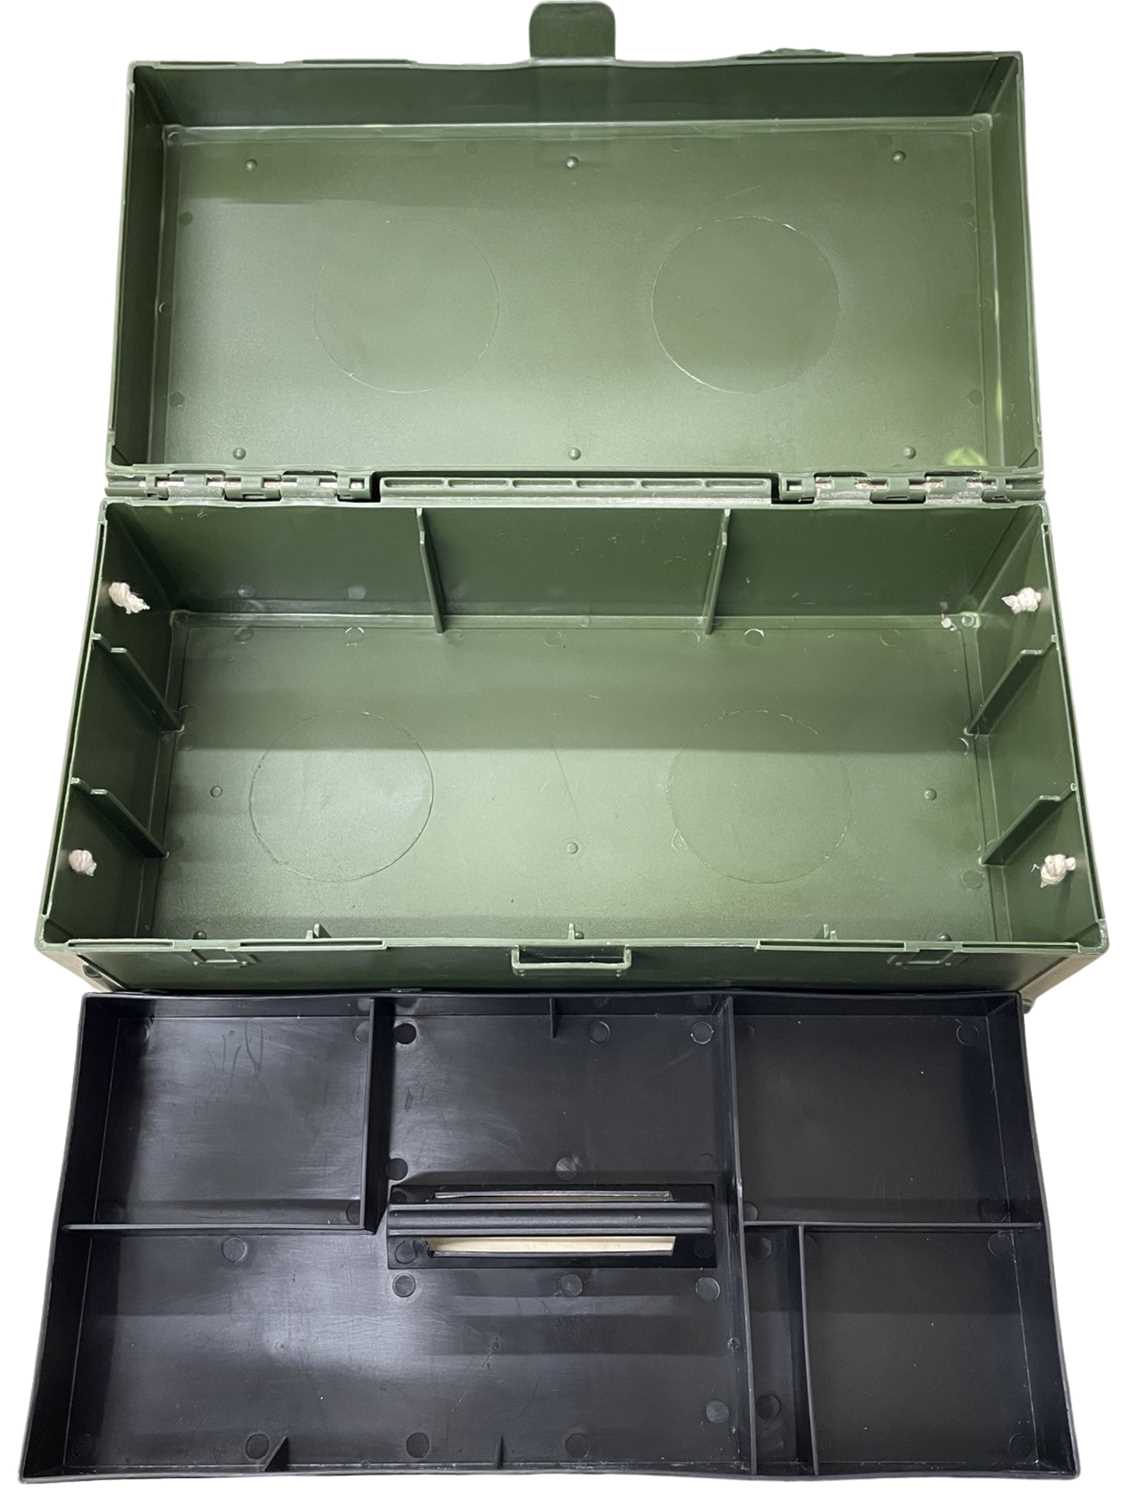 A 1993 Action Man kit box - Image 2 of 3